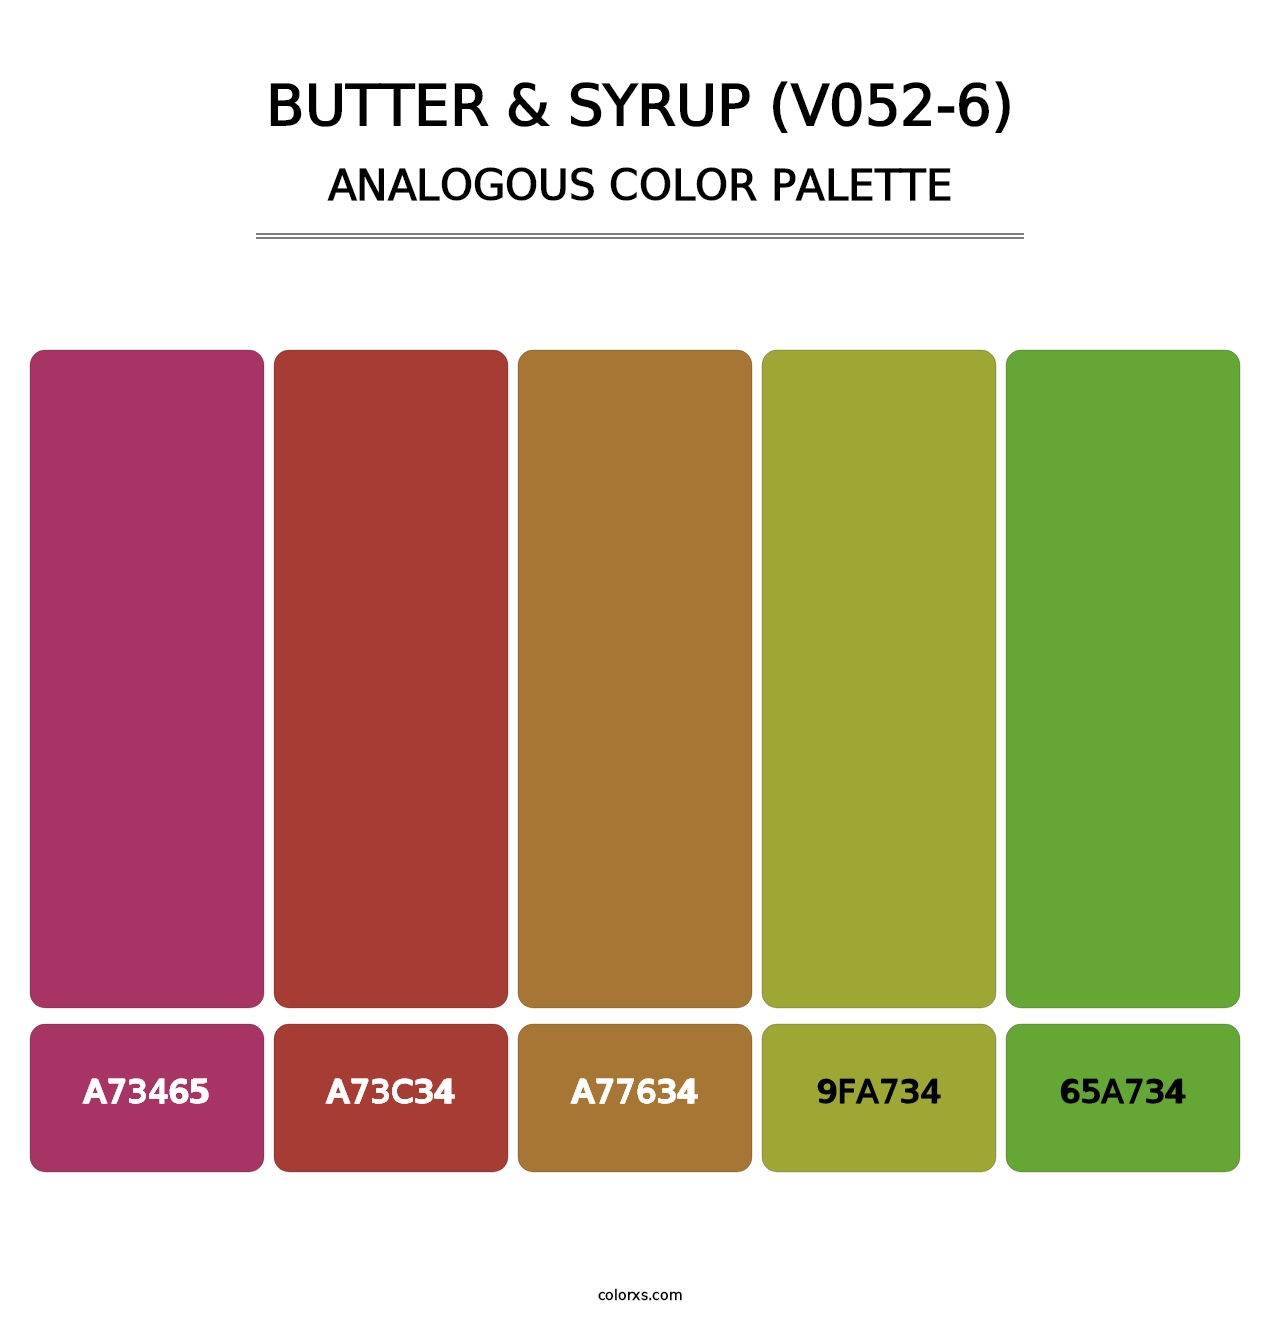 Butter & Syrup (V052-6) - Analogous Color Palette